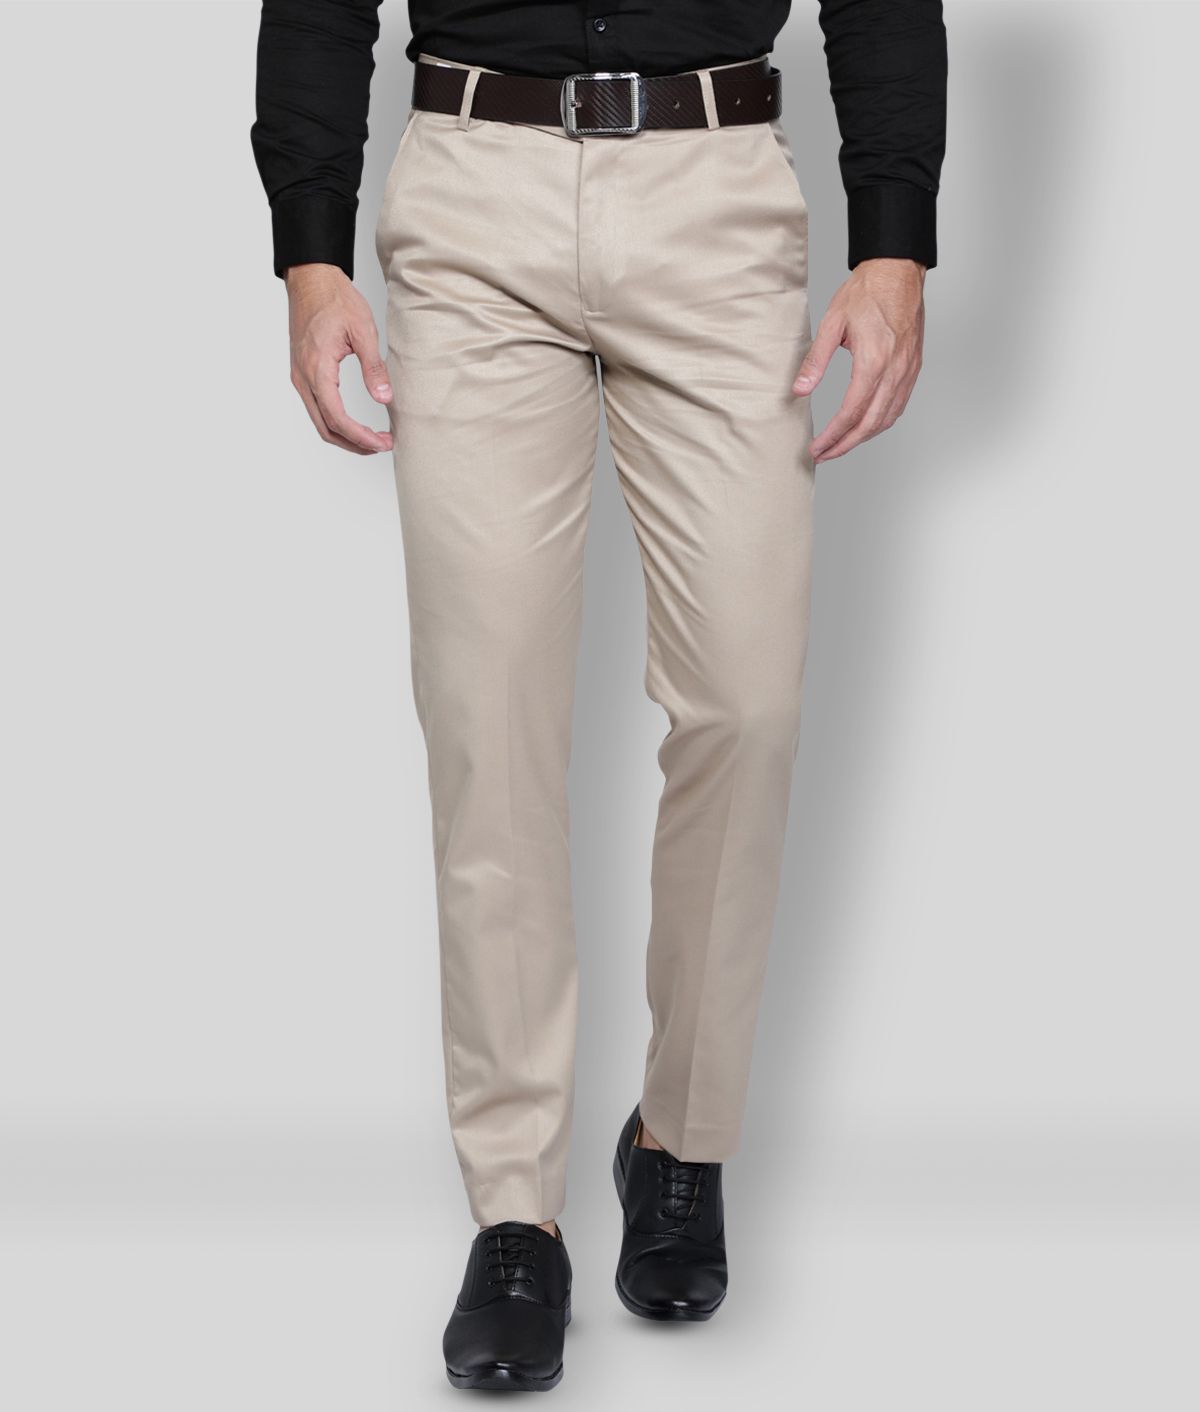     			Haul Chic - Tan Cotton Blend Slim Fit Men's Formal Pants (Pack of 1)